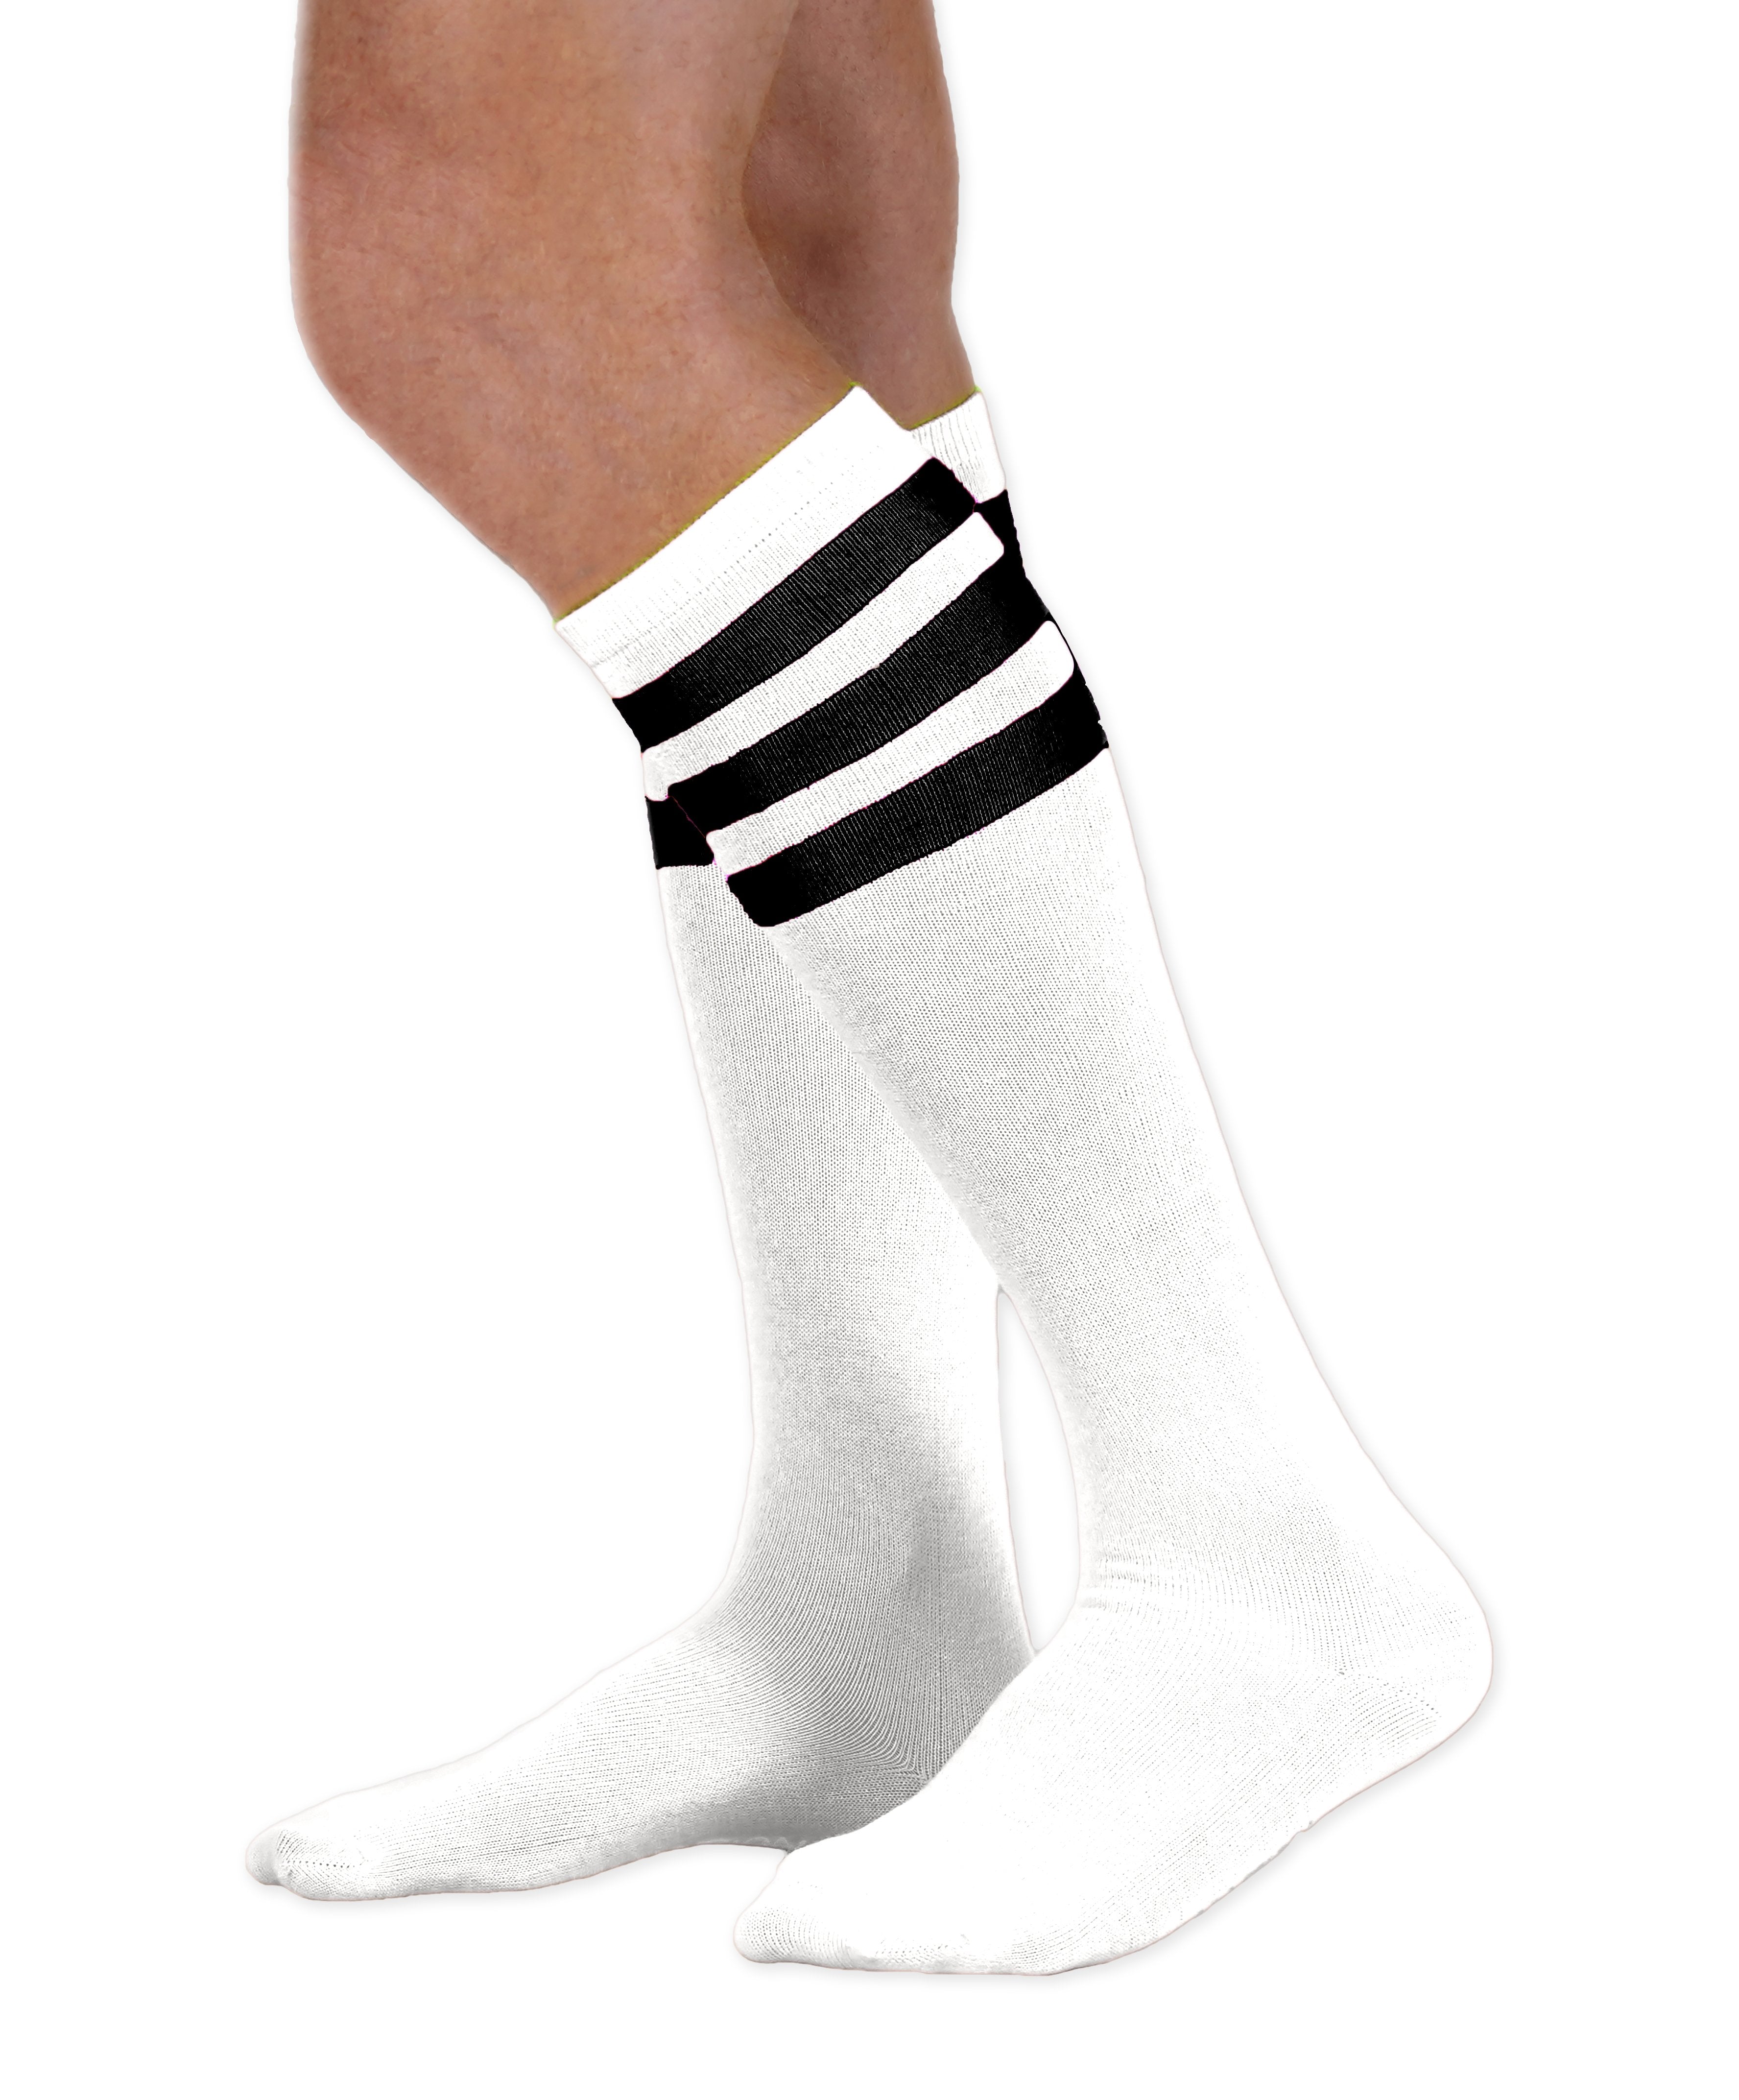 Unisex adult size white knee high tube sock with three black stripes